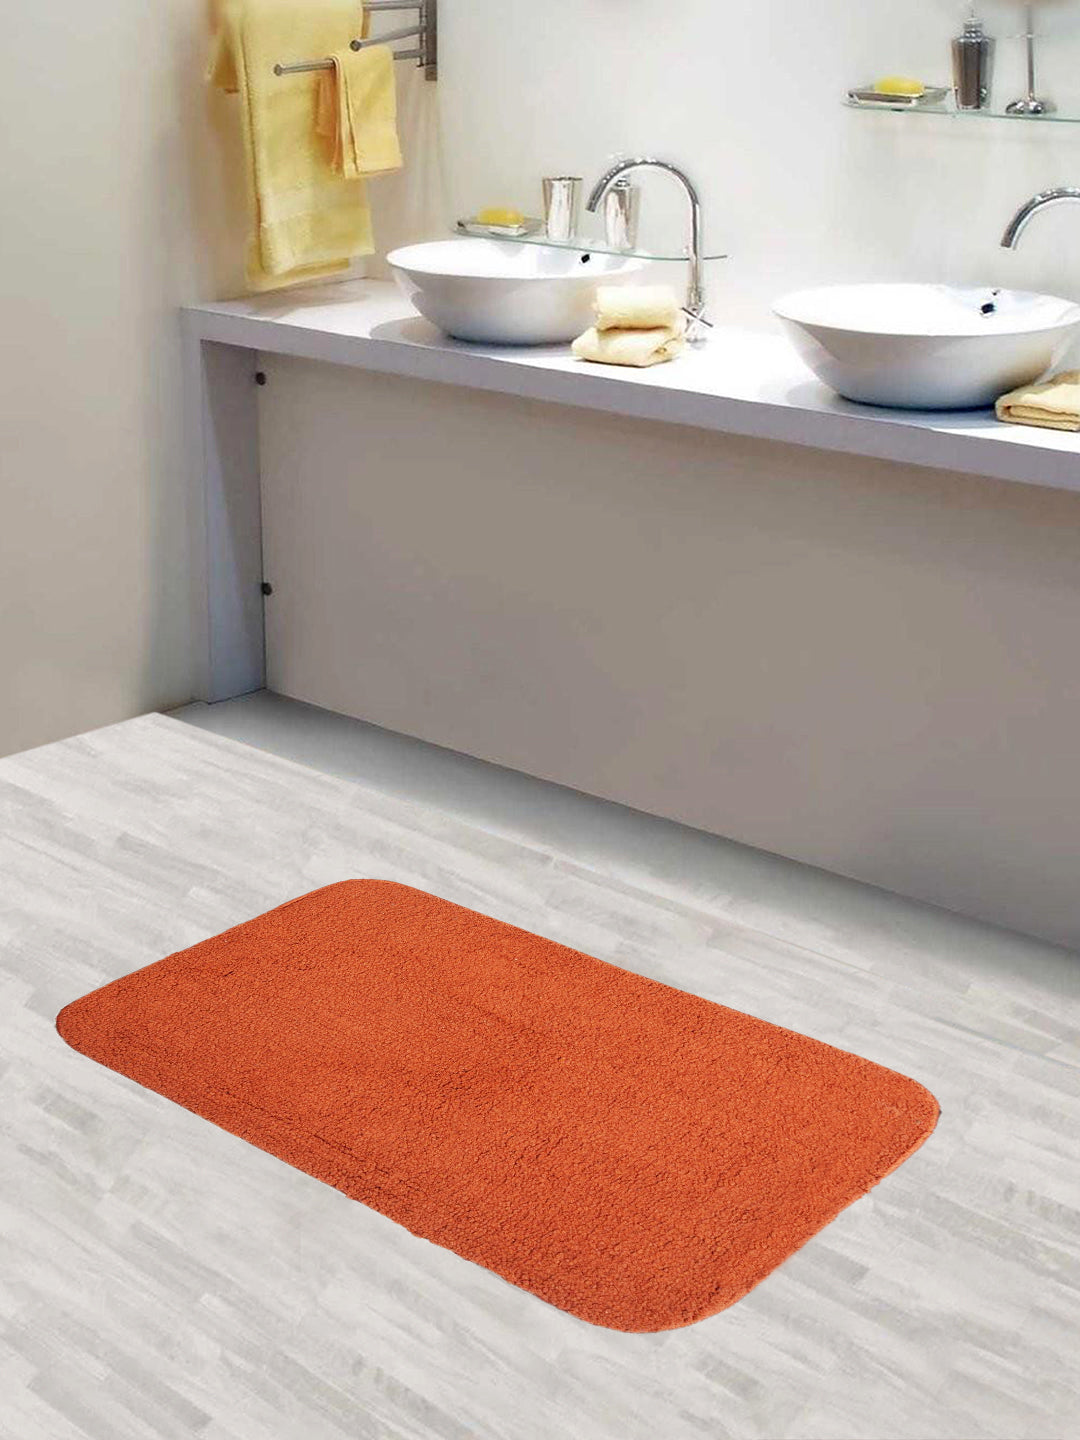 Lushomes Bathroom Mat, floor mats for home, anti slip mat, non slip mat 1800 GSM Floor Mat with High Pile Microfiber, anti skid mat for bathroom floor (12 x 18 Inch, Single Pc, Brown)